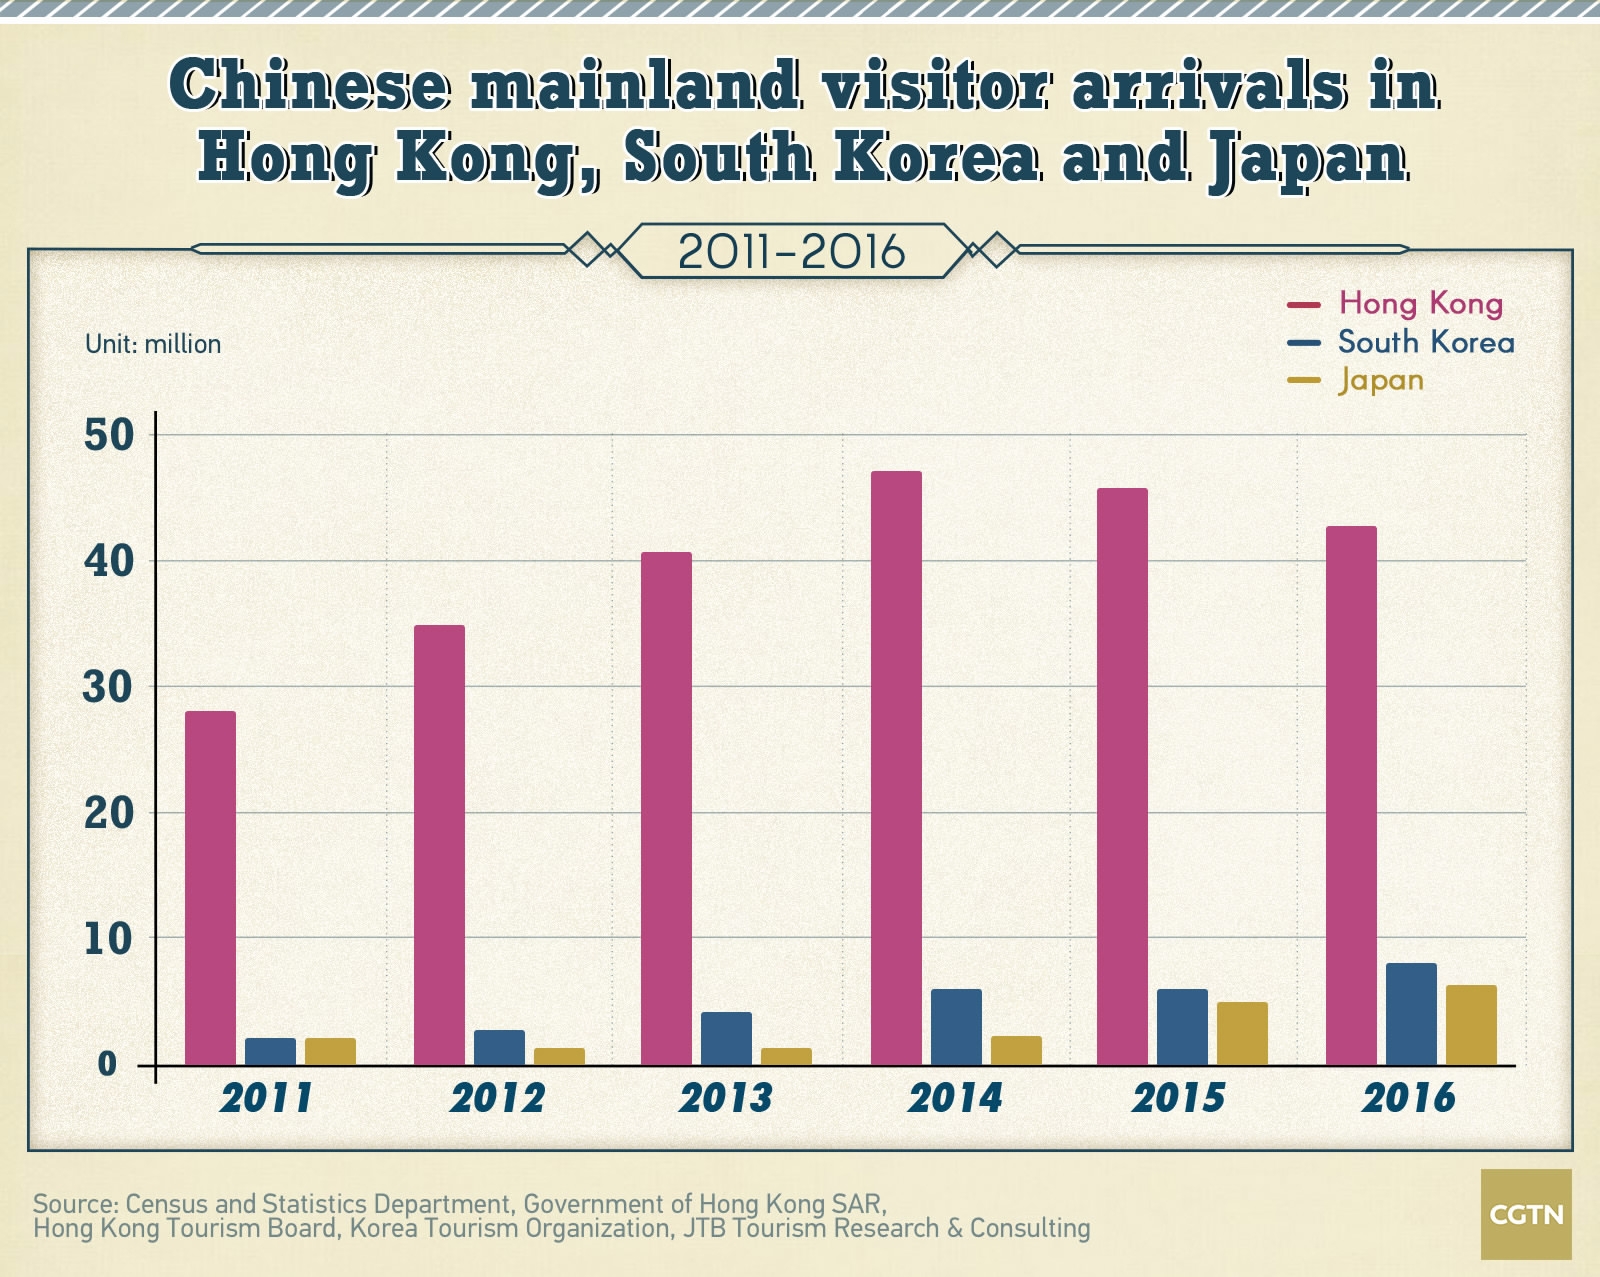 hong kong tourism board statistics